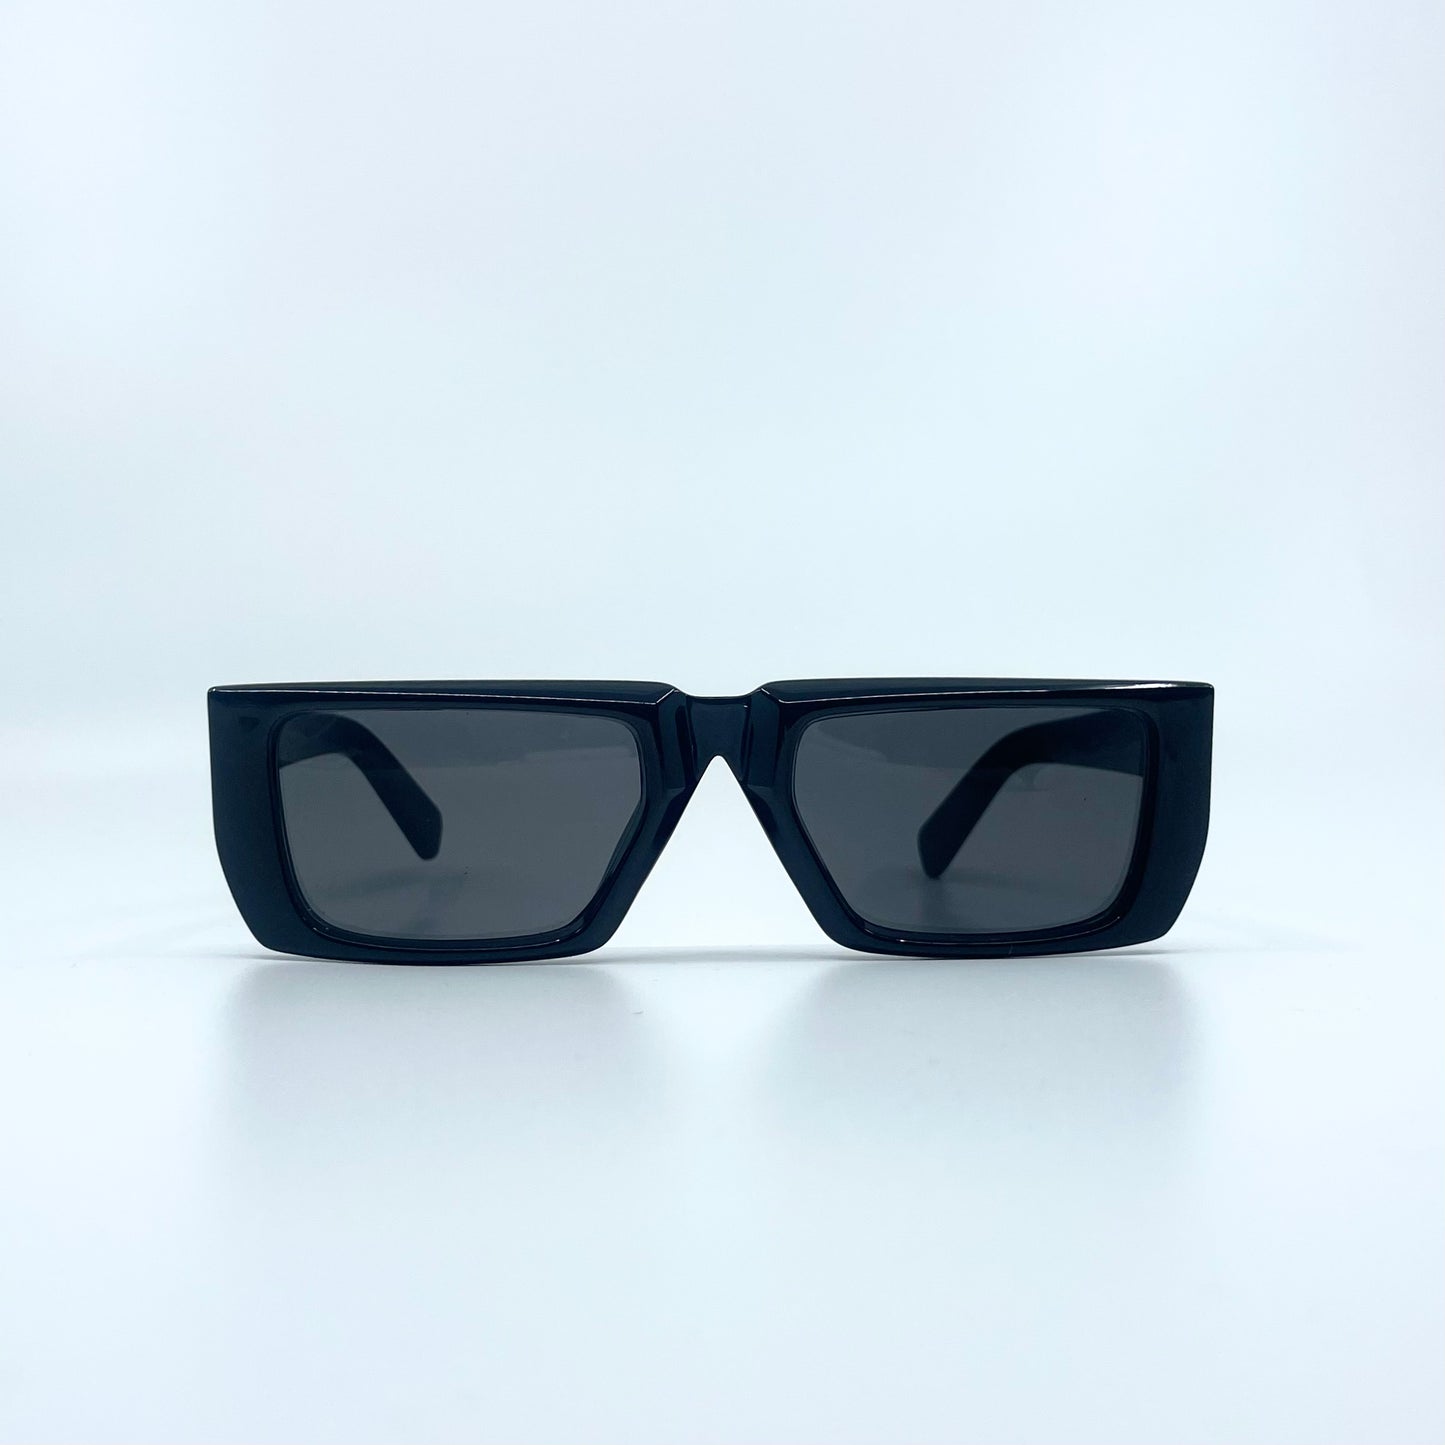 “Low Key” Sunglasses